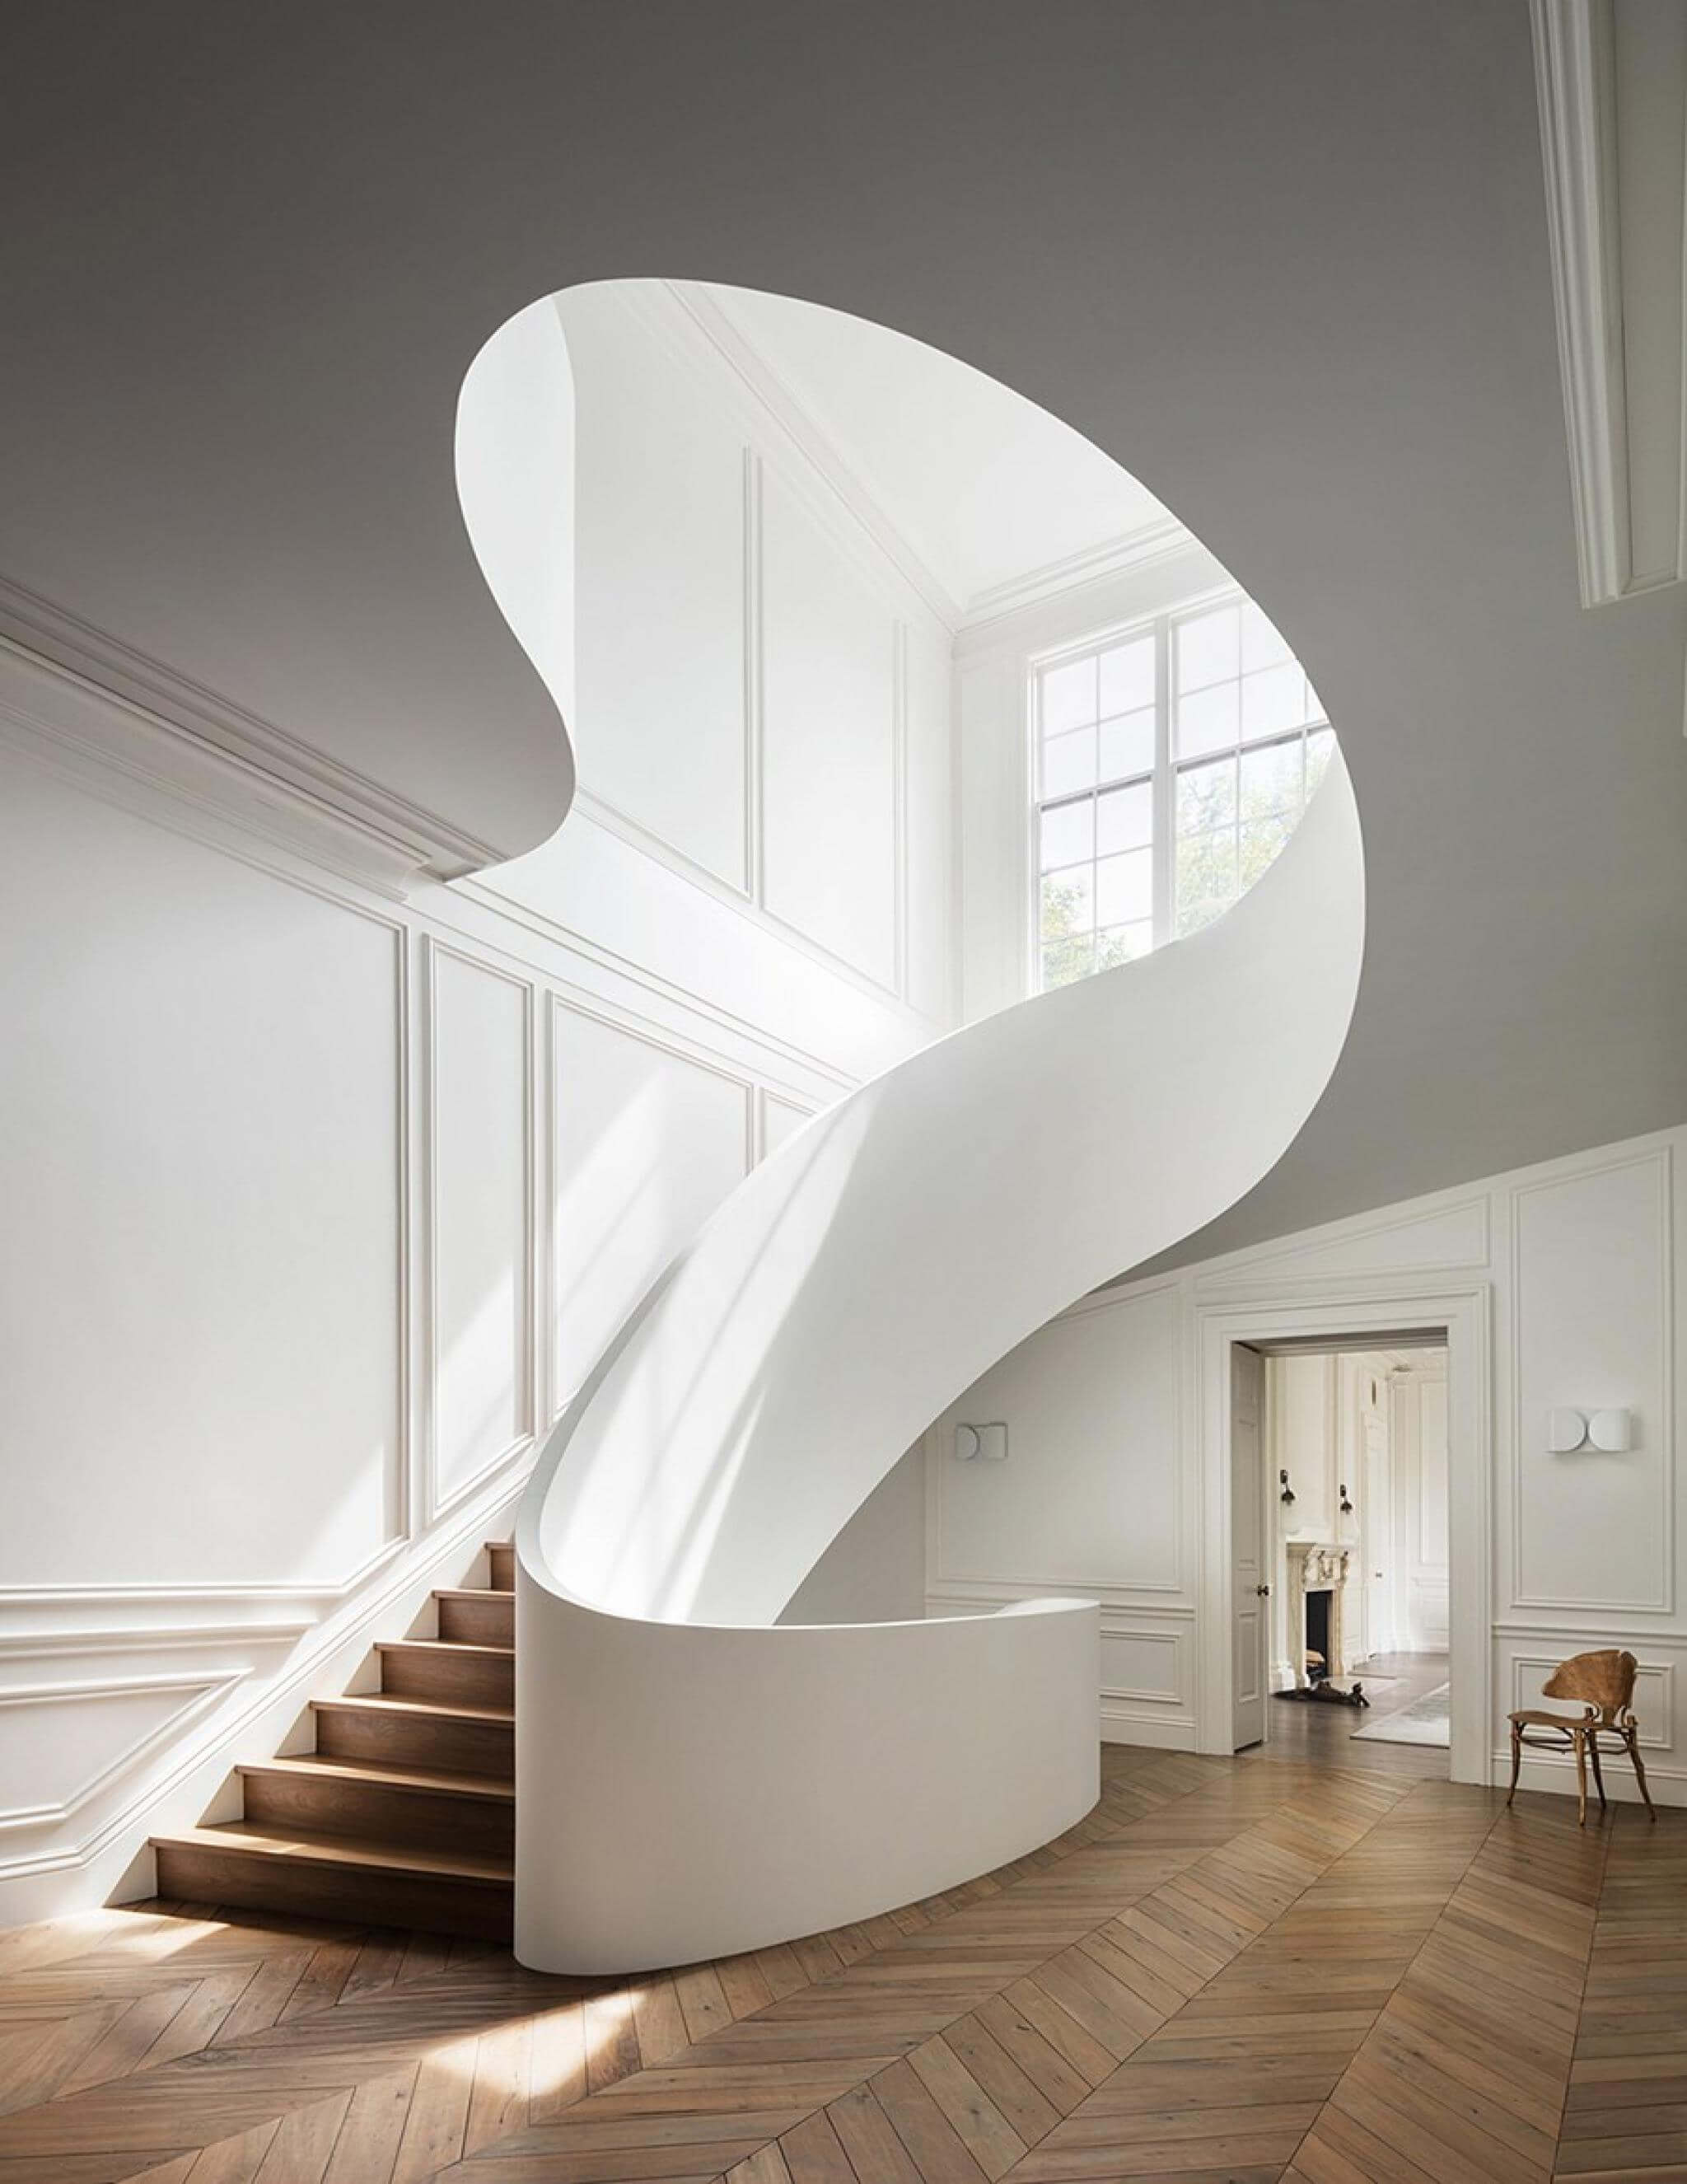 Impressive Staircase at Boston House